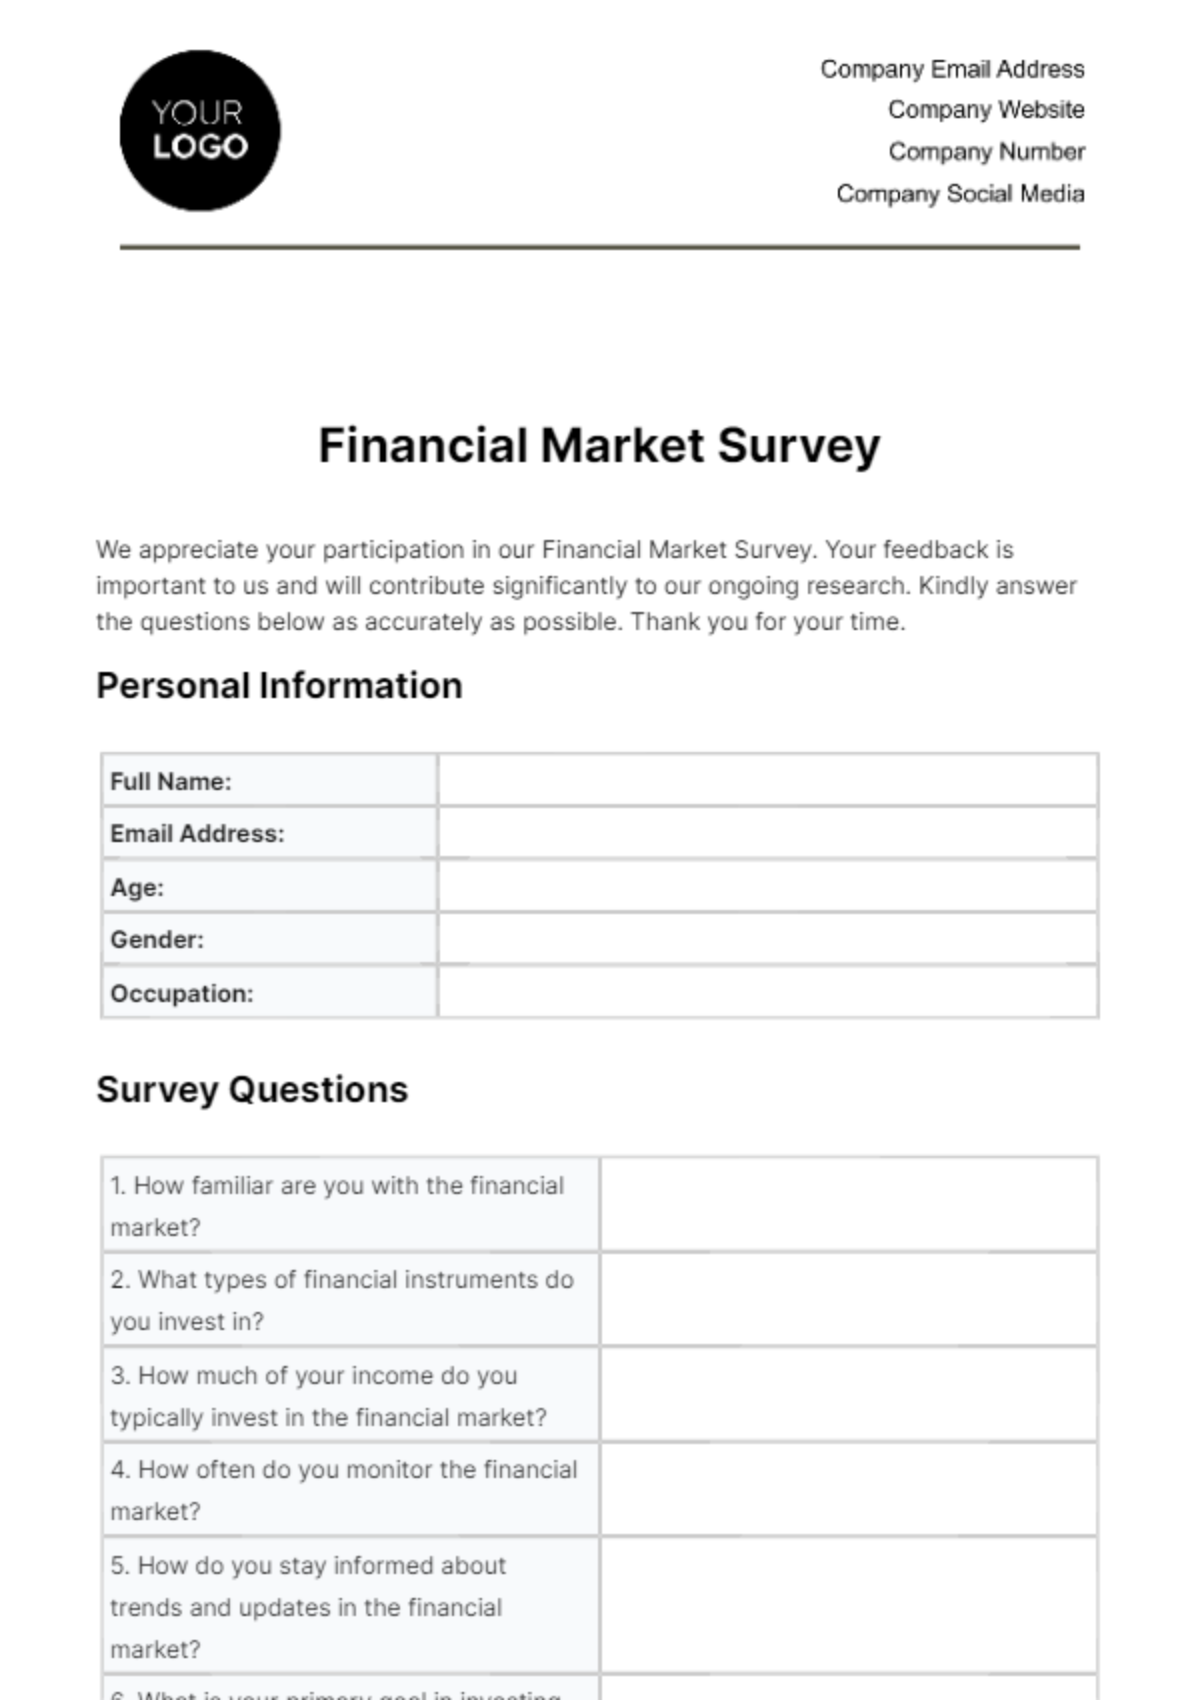 Financial Market Survey Template